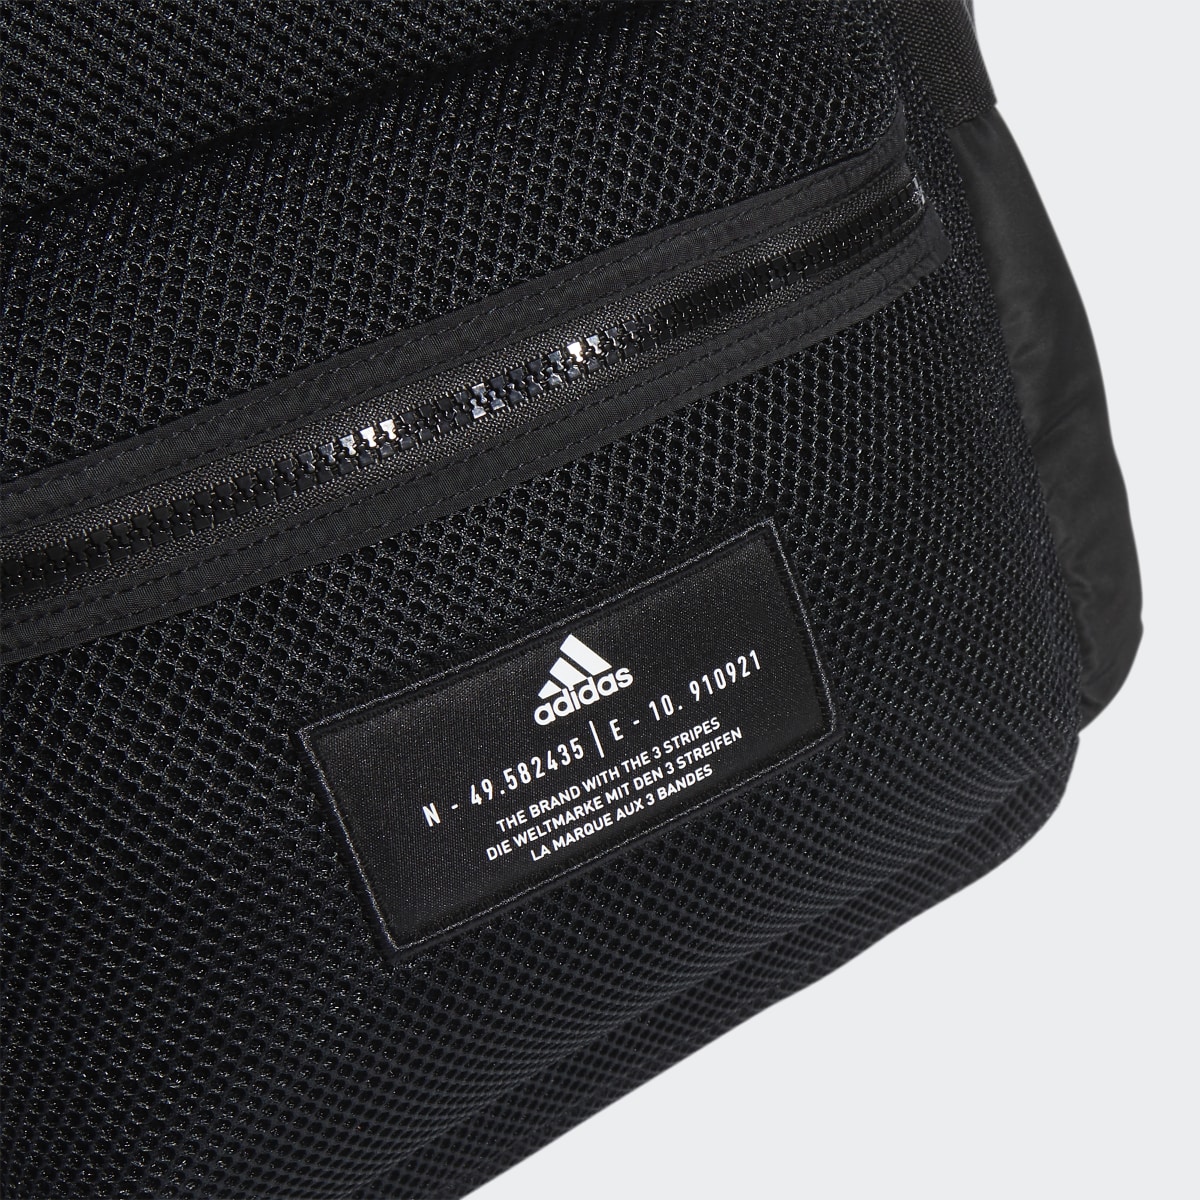 Adidas VFA Backpack. 8